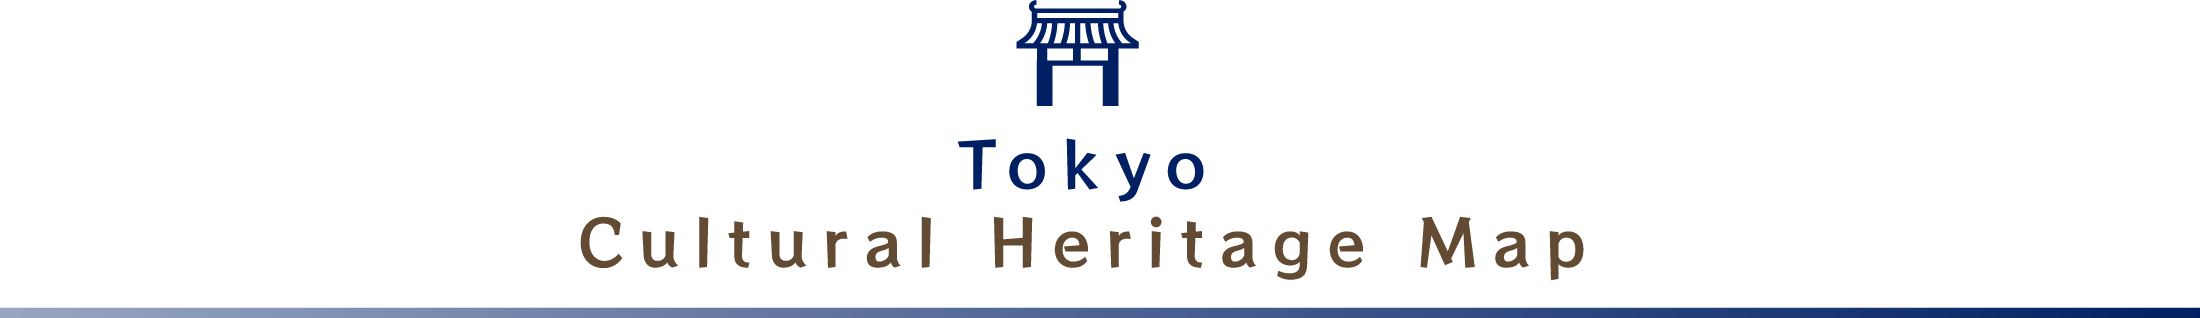 Tokyo Cultural Heritage Map